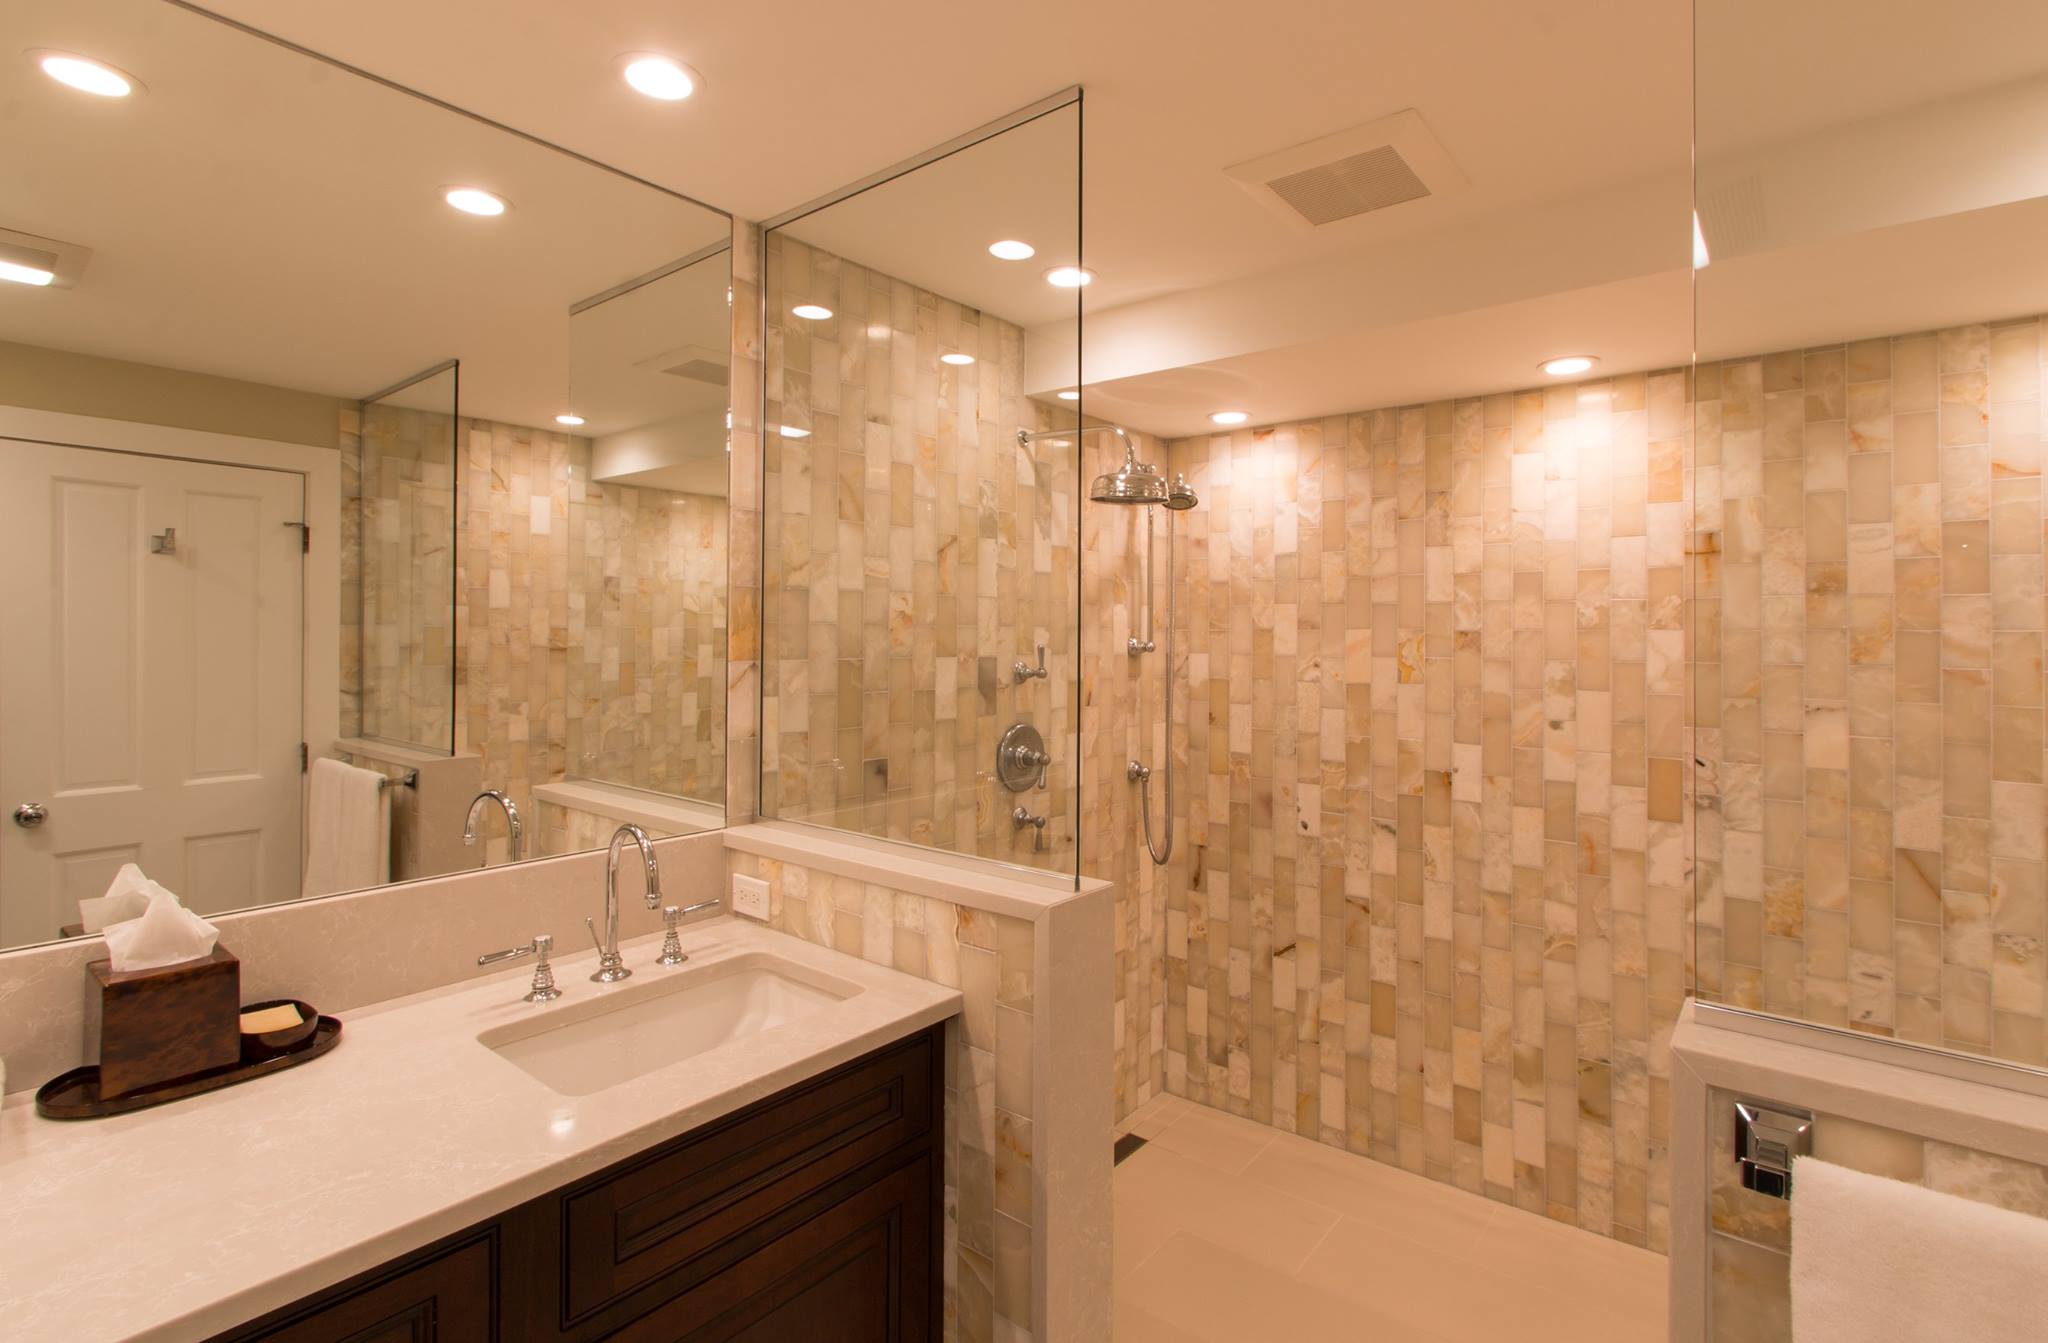  Elegant  Master  Bathroom  Ideas  Tile  Showcase